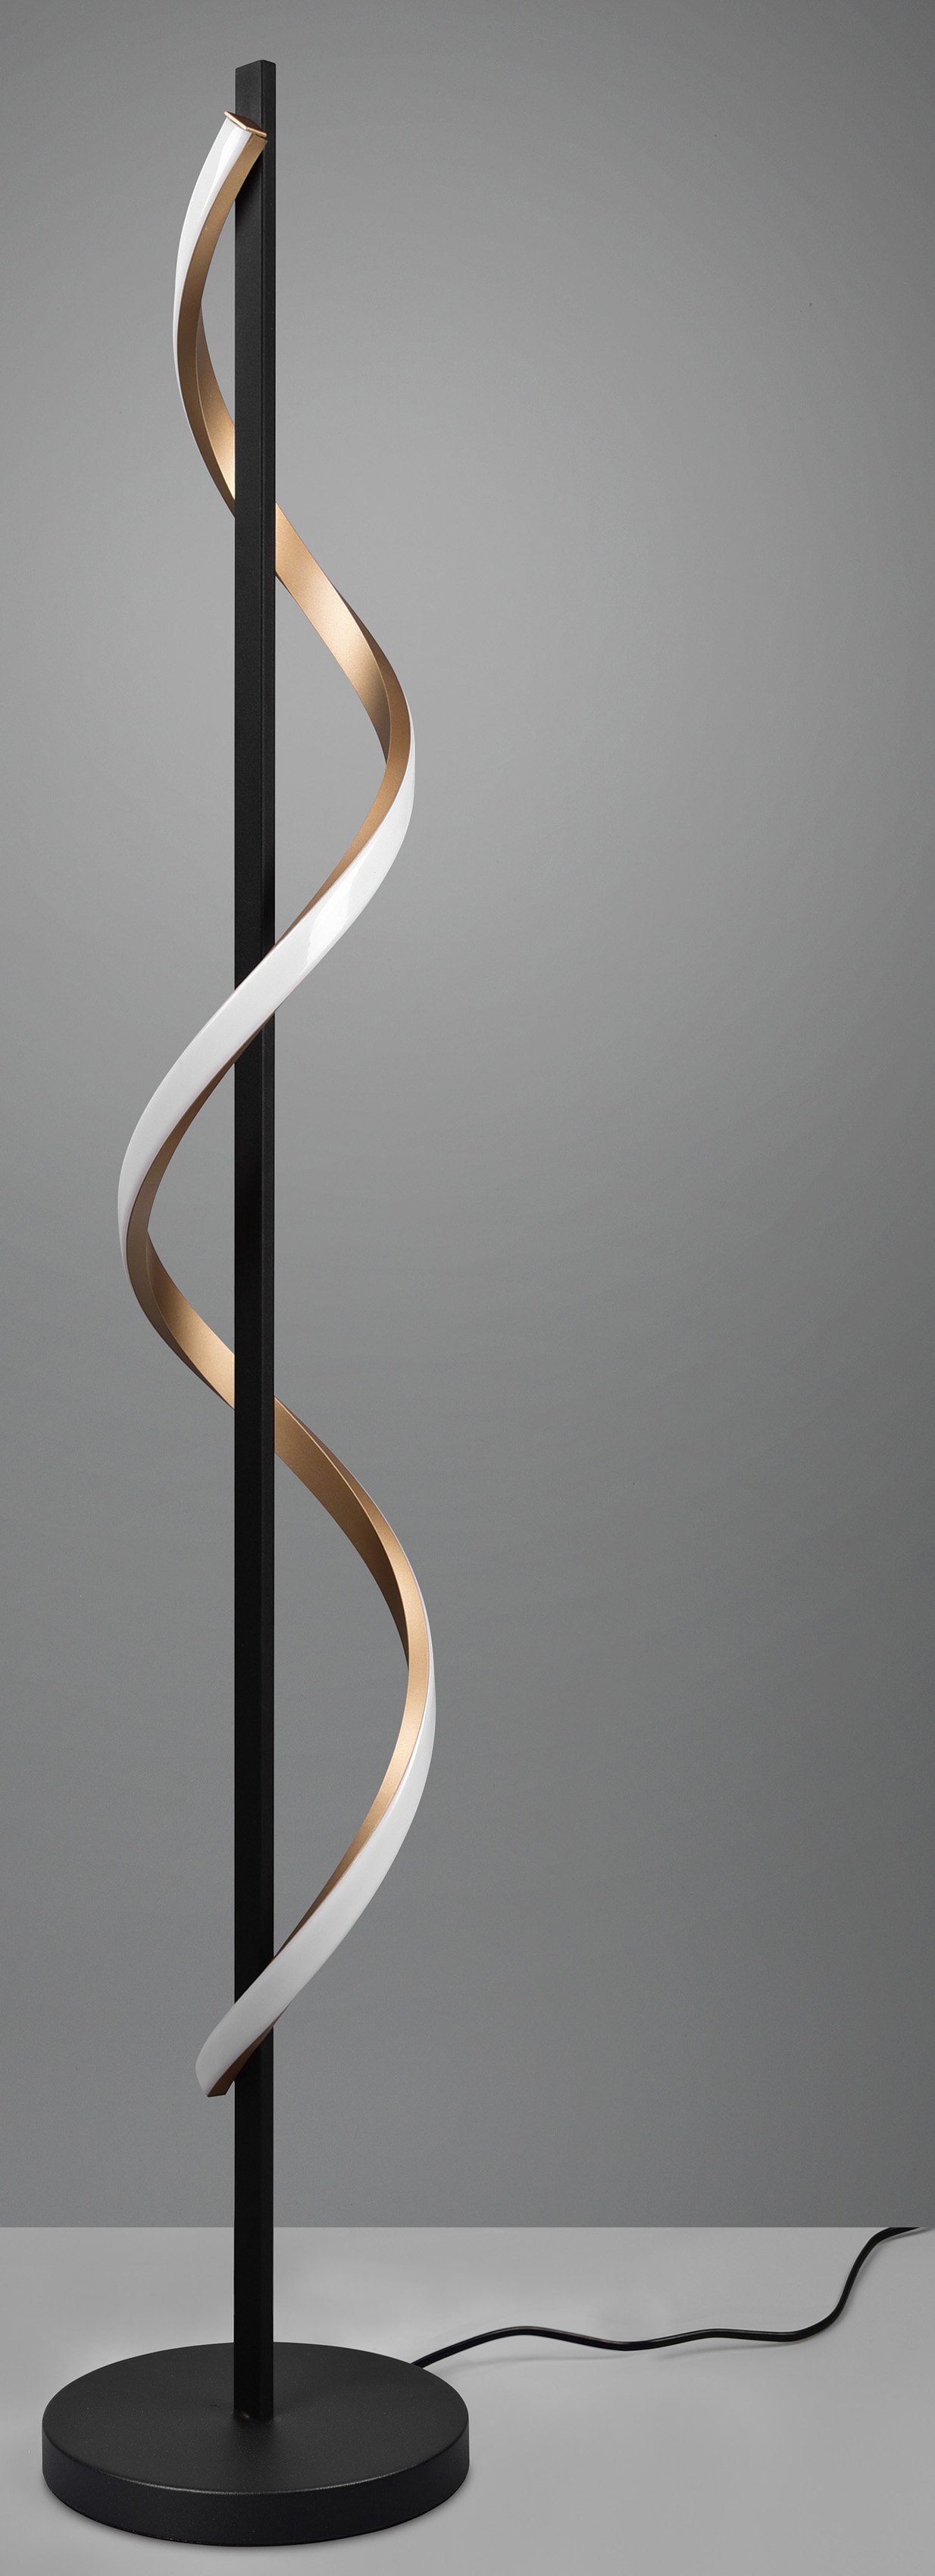 Style Lumen Stehlampe Torca, of 120 Höhe Dimmer, Fußdimmer, LED Warmweiß, cm, Stehleuchte schwarz-gold, LED integriert, 2300 Places LED fest